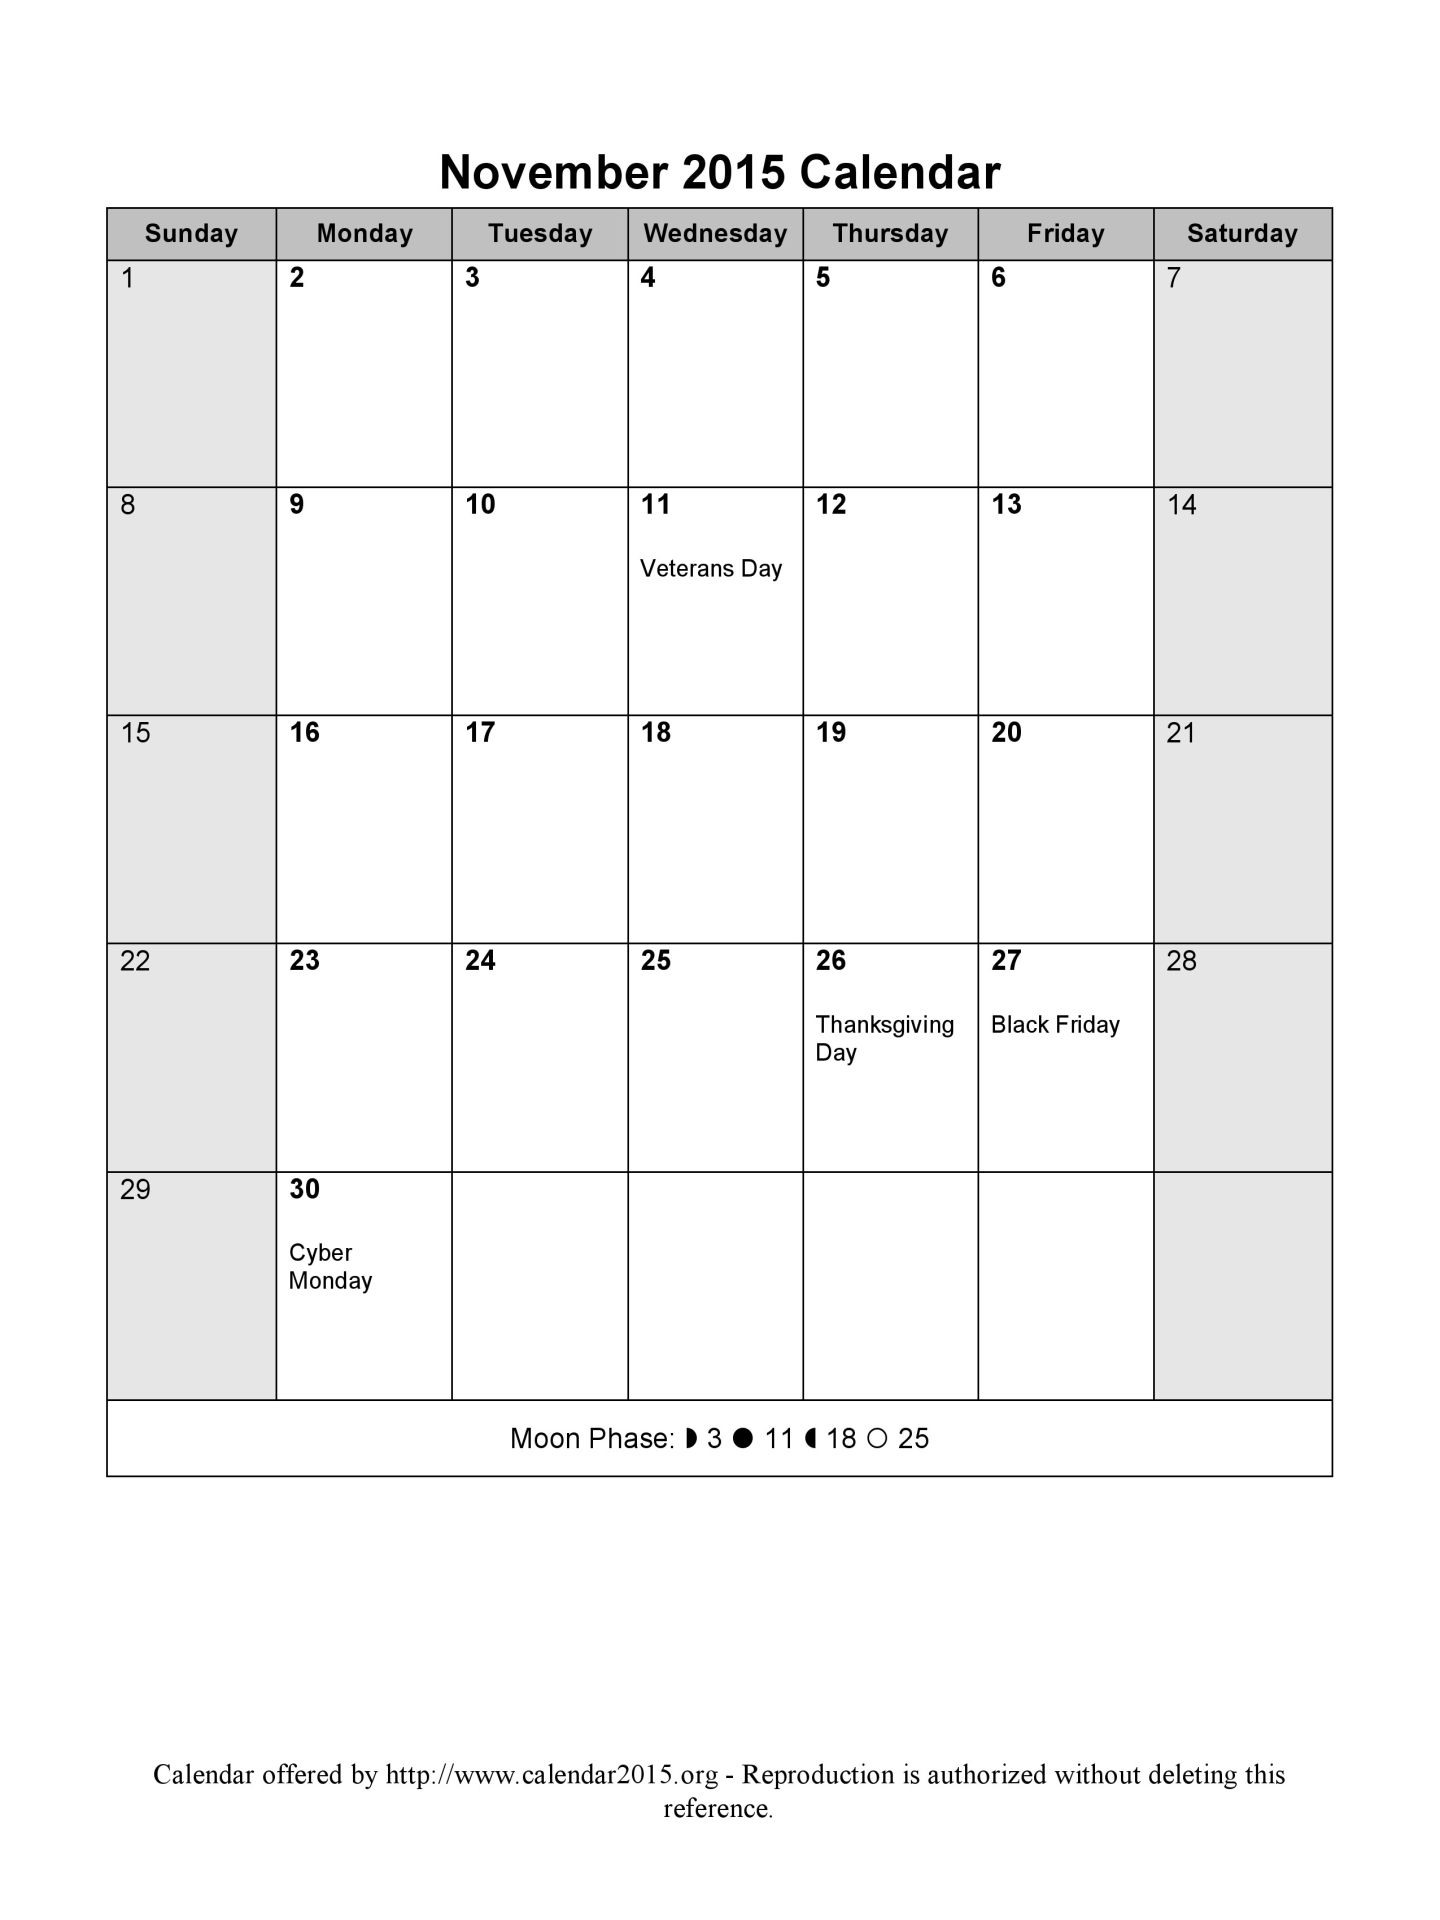 November 2015 Calendar Template Word